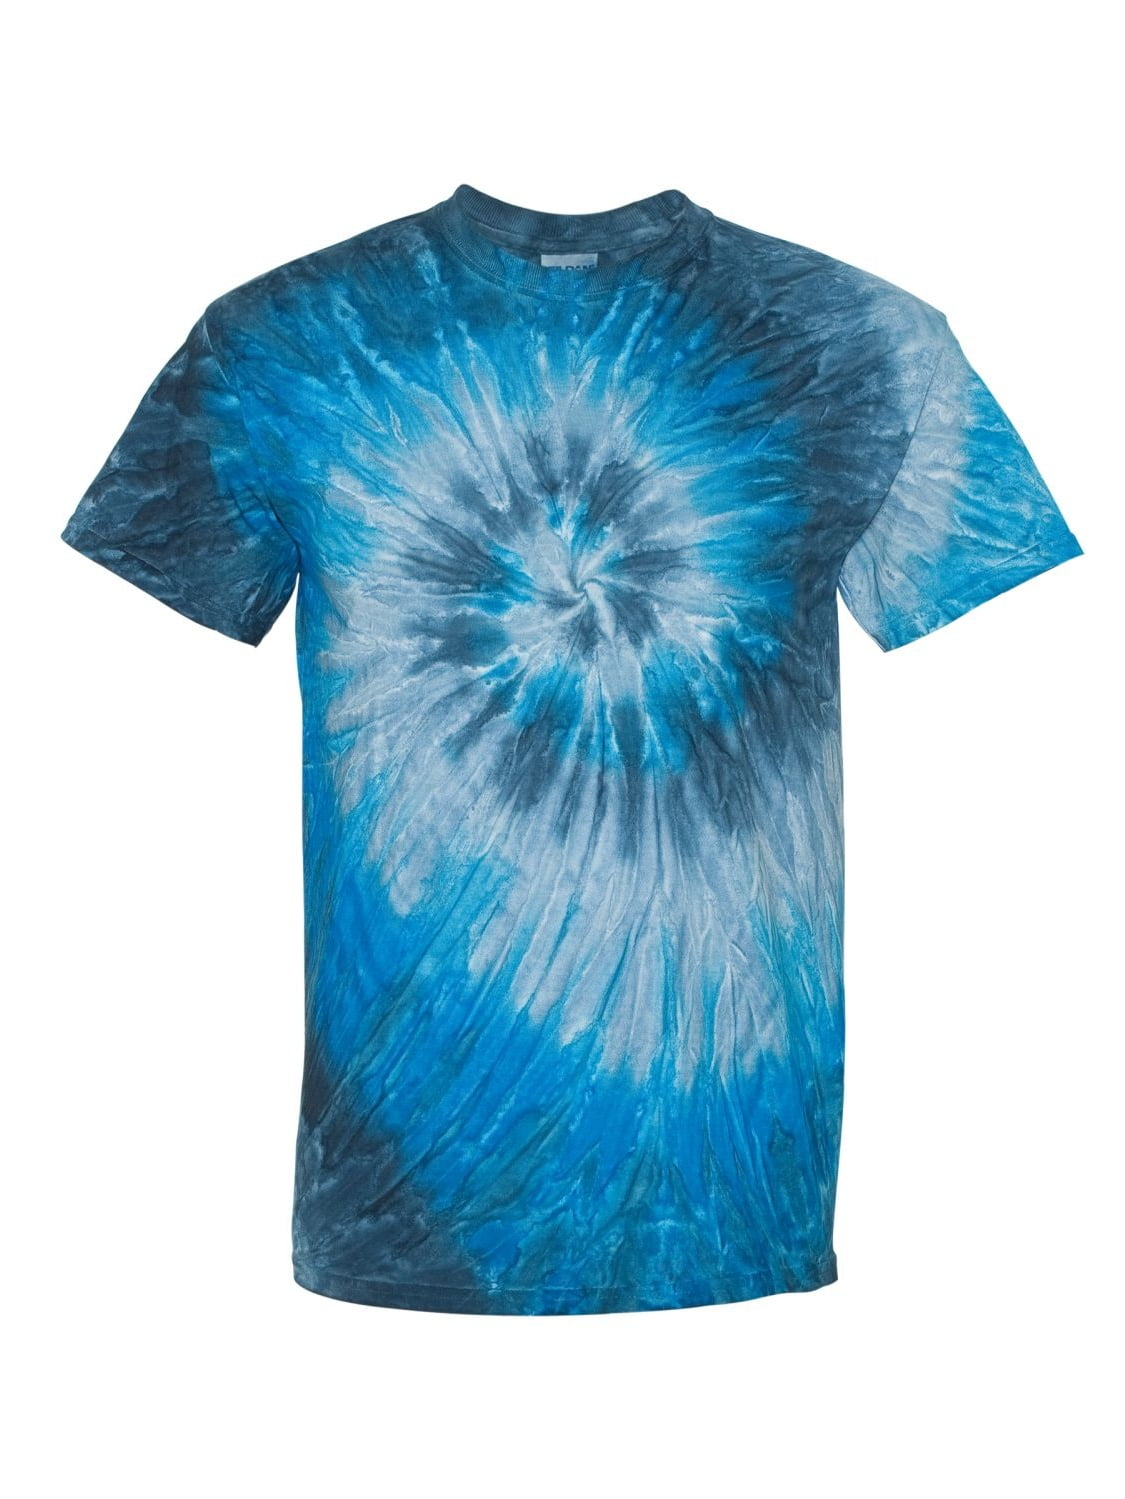 Dyenomite - Tie-Dye 87 Ripple Pigment Dyed T-Shirt - Walmart.com ...